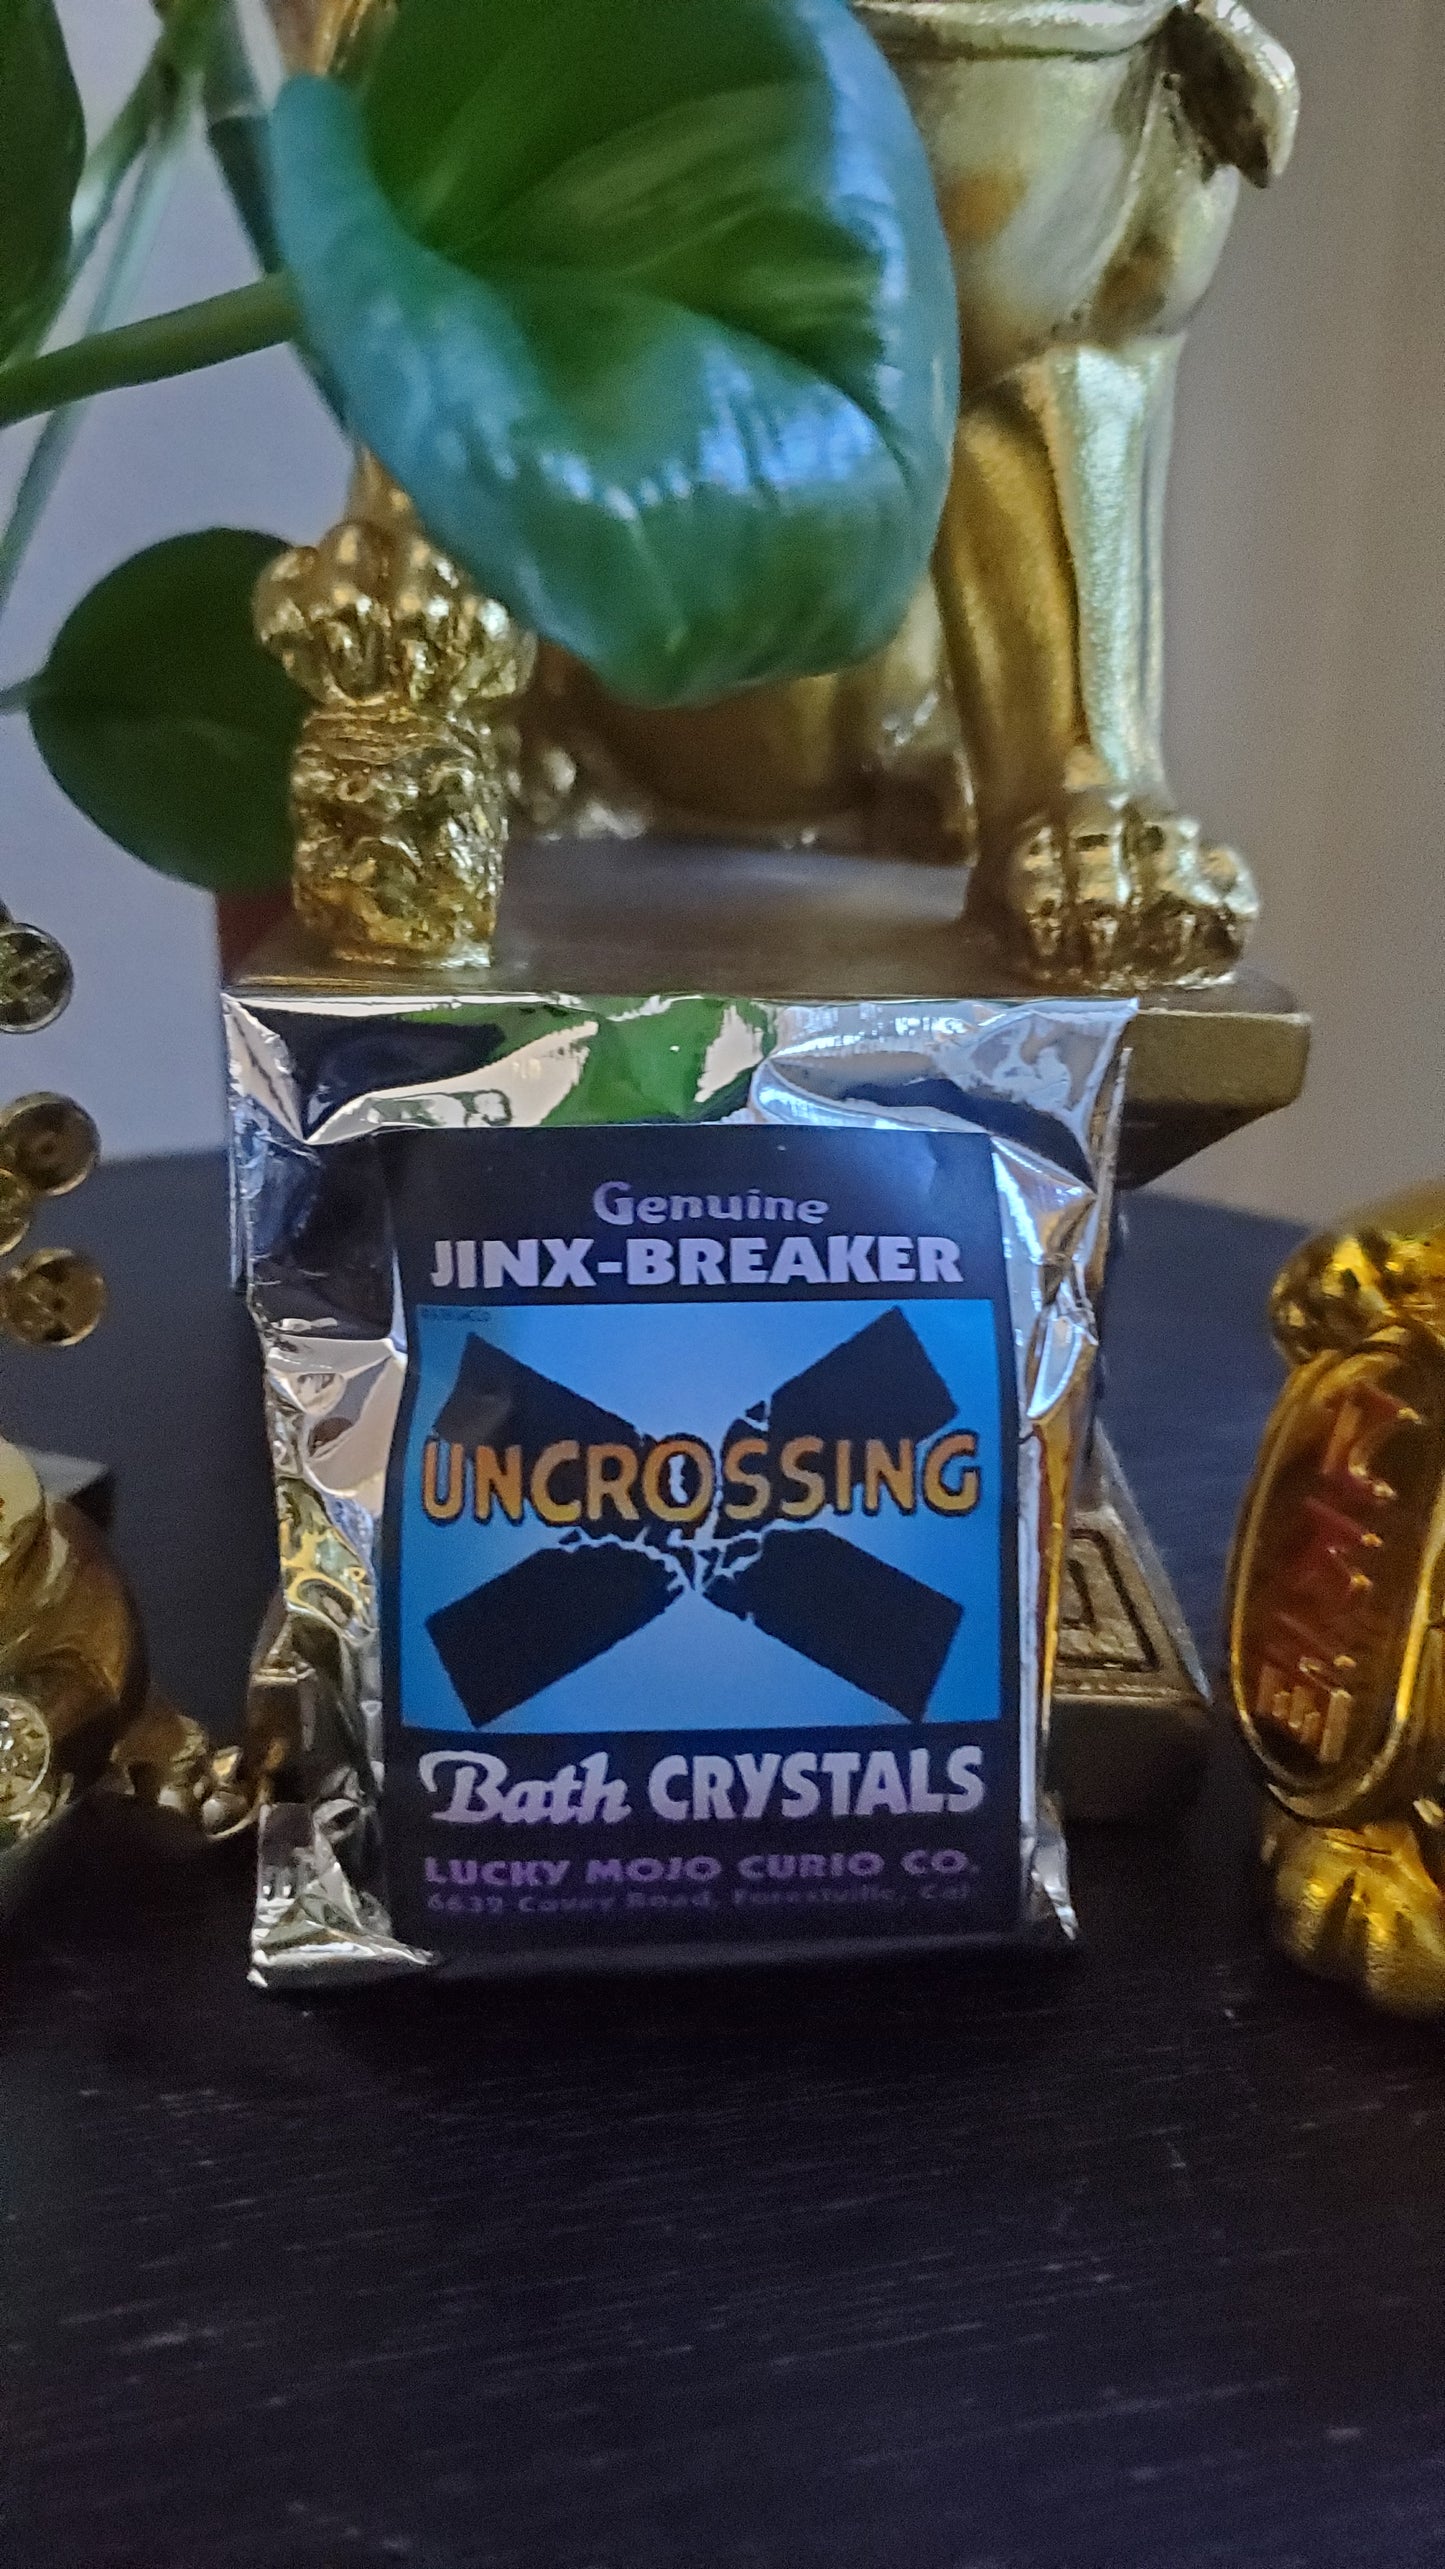 LuckyMojoCurioCo "Uncrossing Jinx-Breaker" Bath Crystals #Great Deal #BathCrystal #SpiritBath #CleansingRituals #RitualMagick #Protection